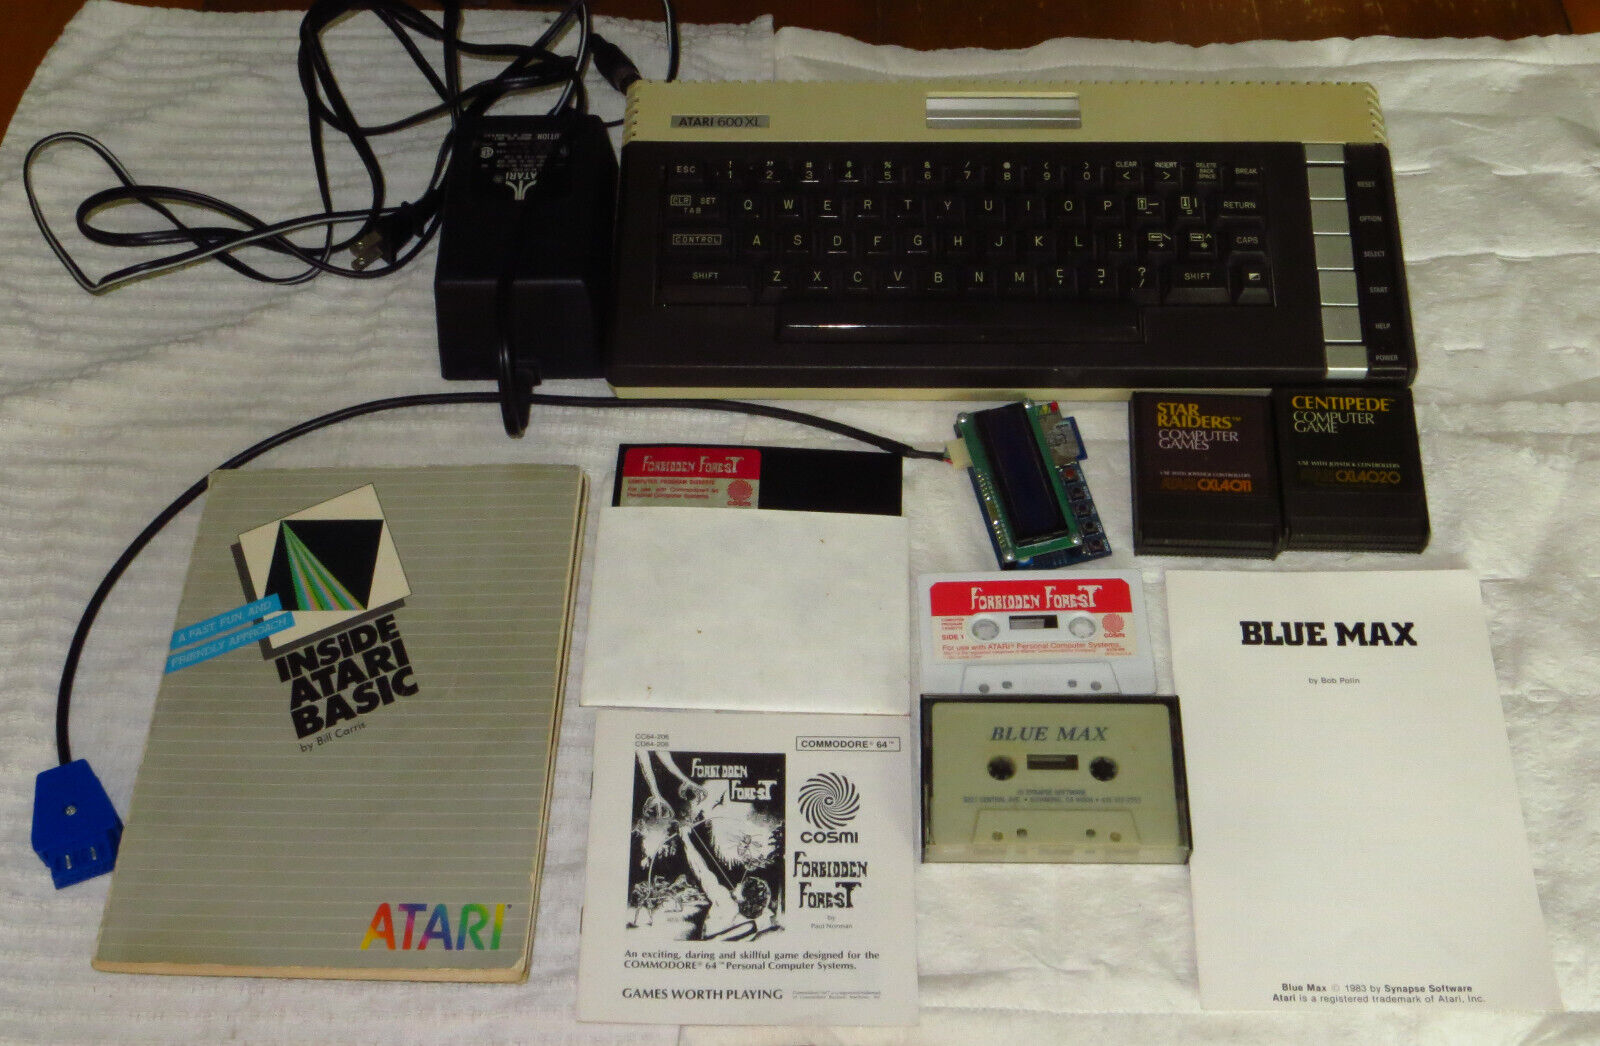 Atari 600XL microcomputer lot with games, manuals - please see description